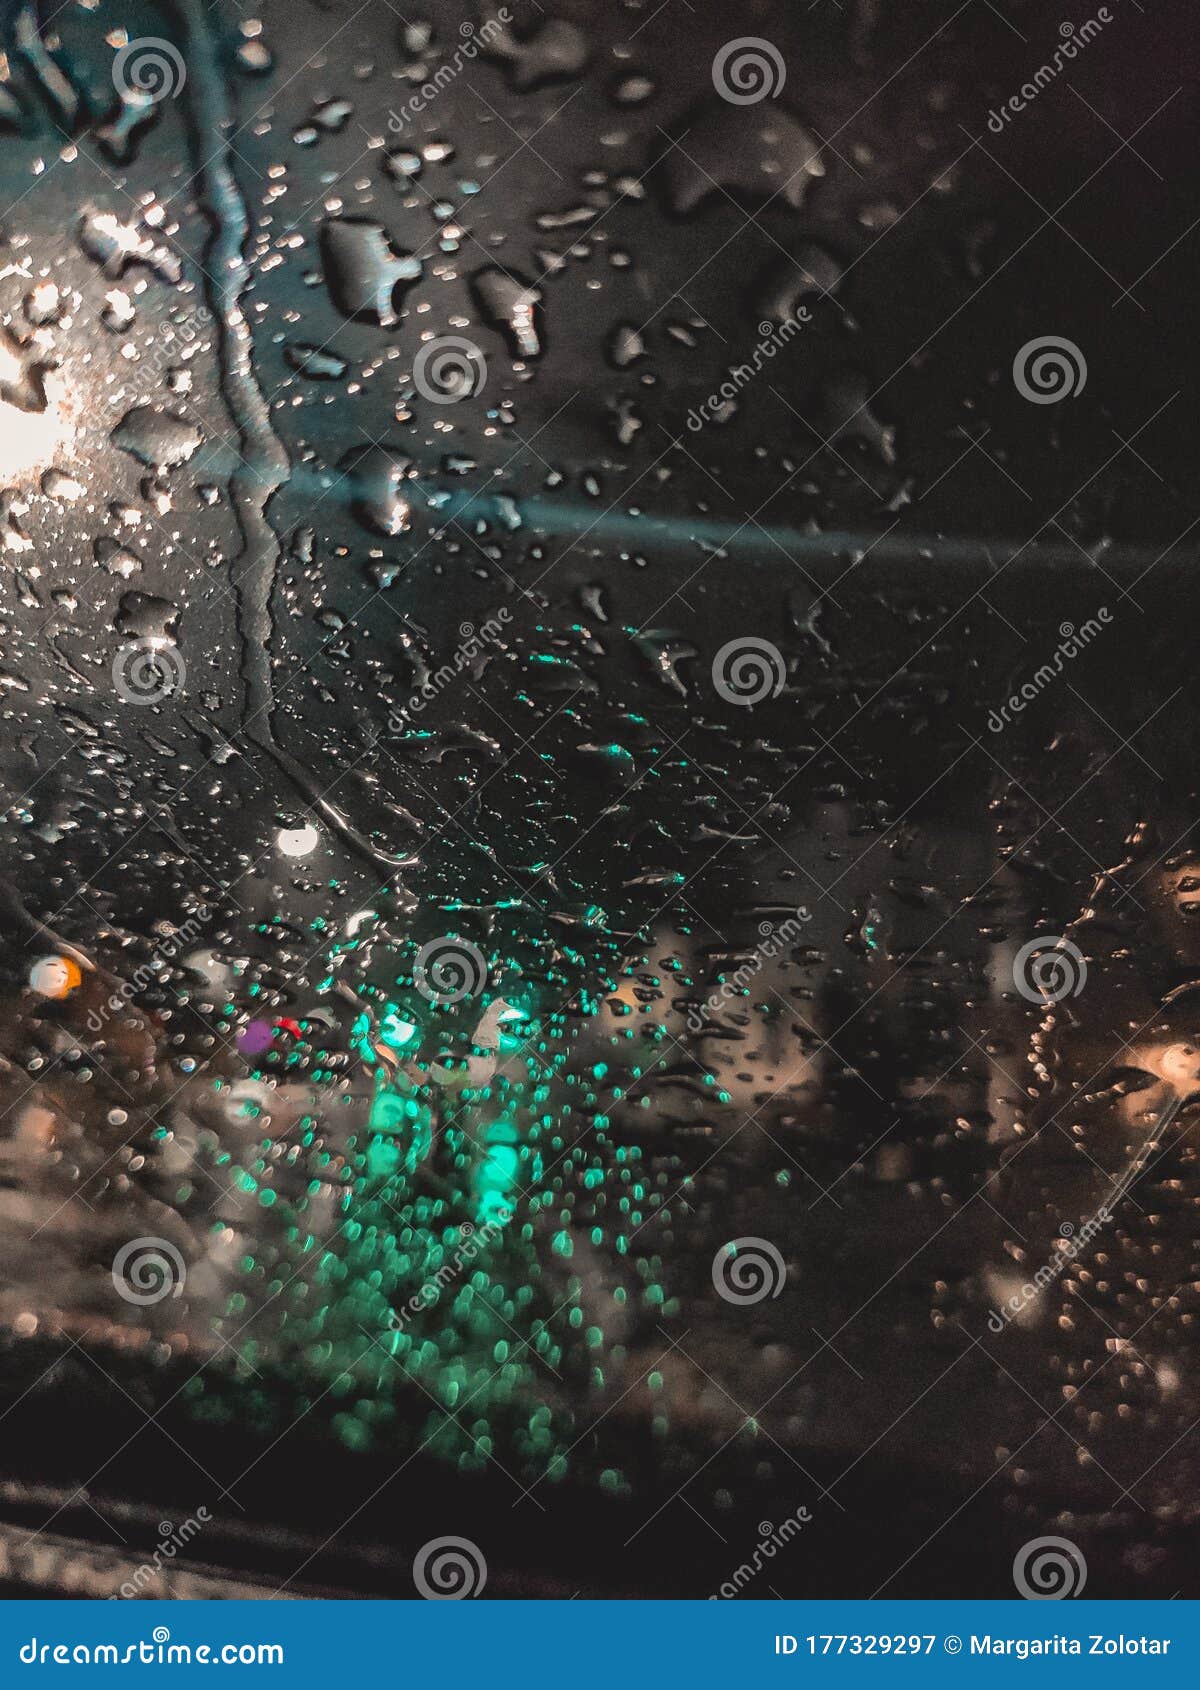 Rain Drops On Window With Road Light Bokeh Water Drop On The Glass